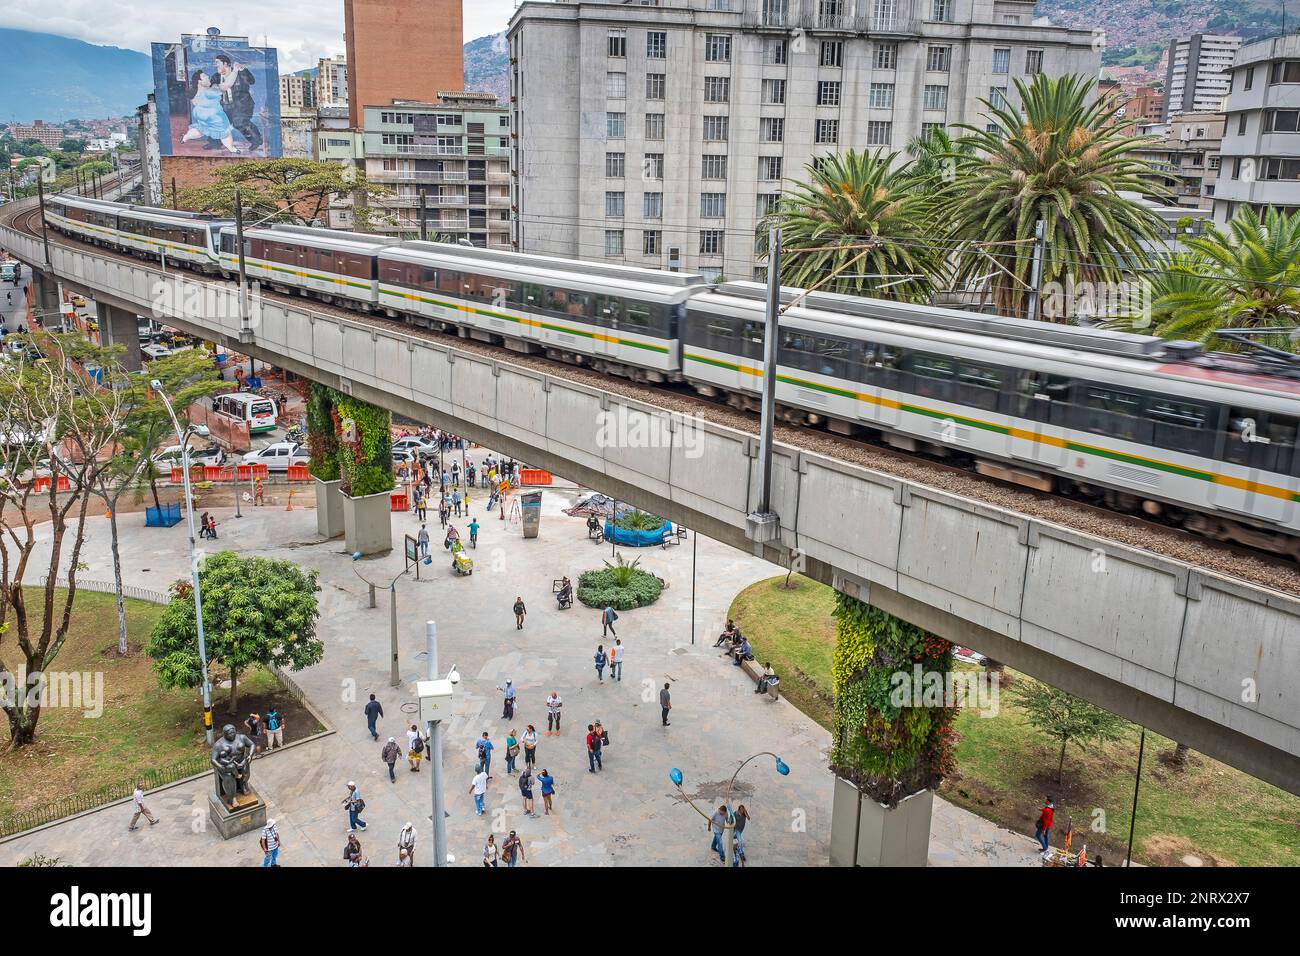 metro, subway, A line between Prado station and Hospital station, city center, skyline, Medellín, Colombia Stock Photo